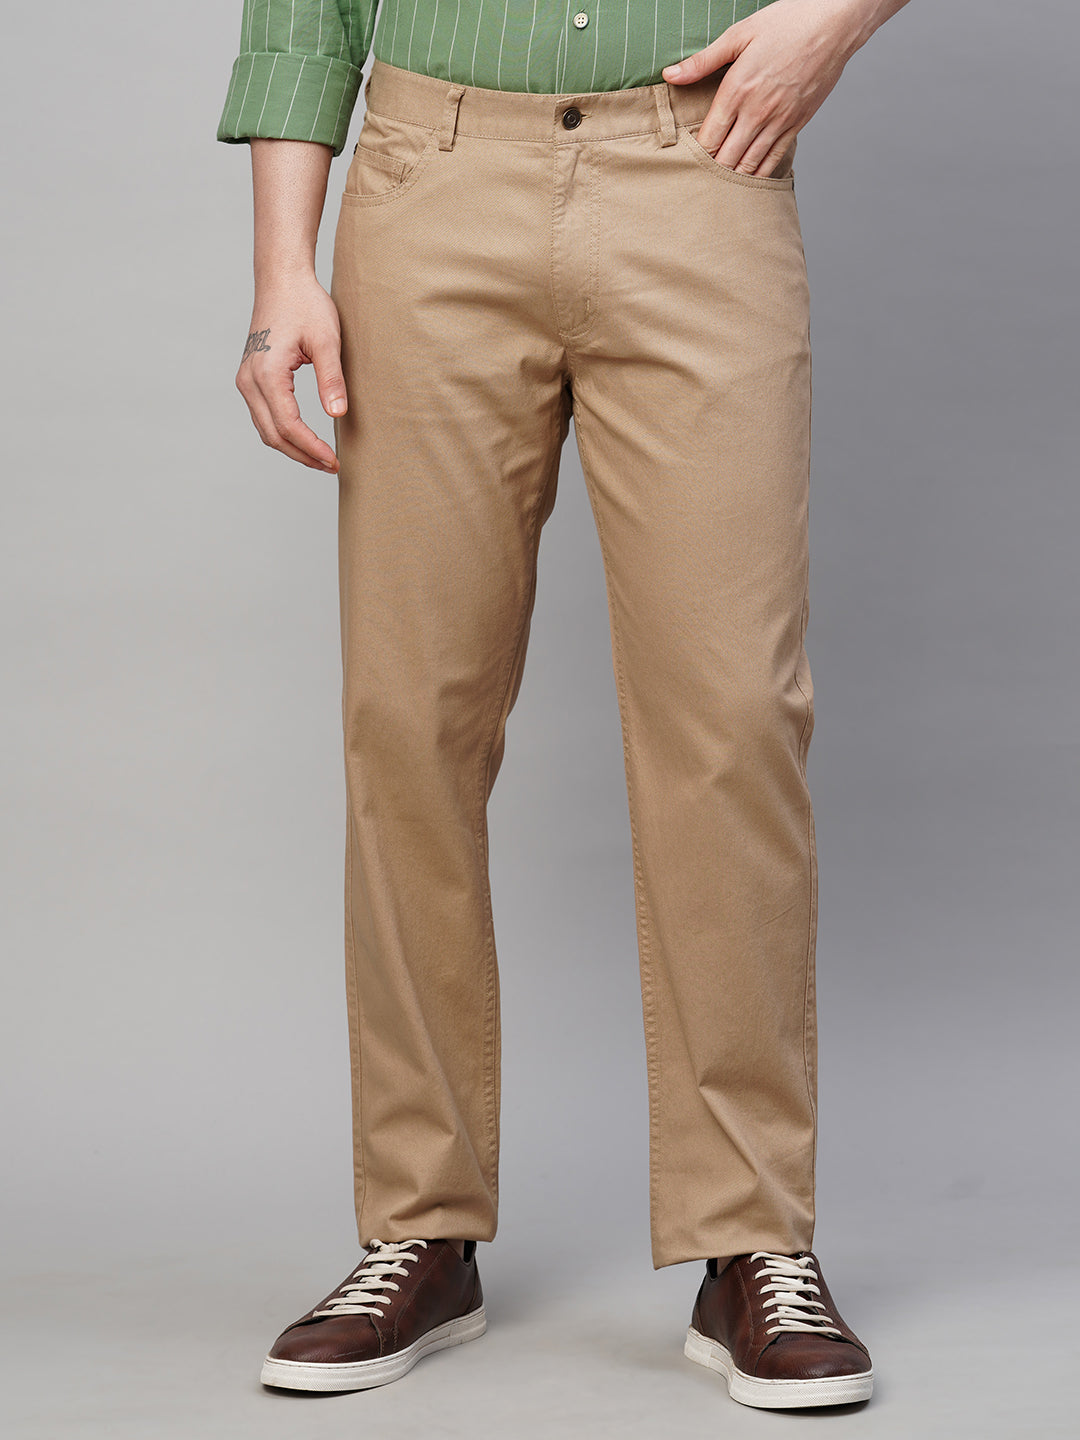 Men's Comfort Stretch Chino Pants, Slim Fit, Straight Leg | Pants at  L.L.Bean